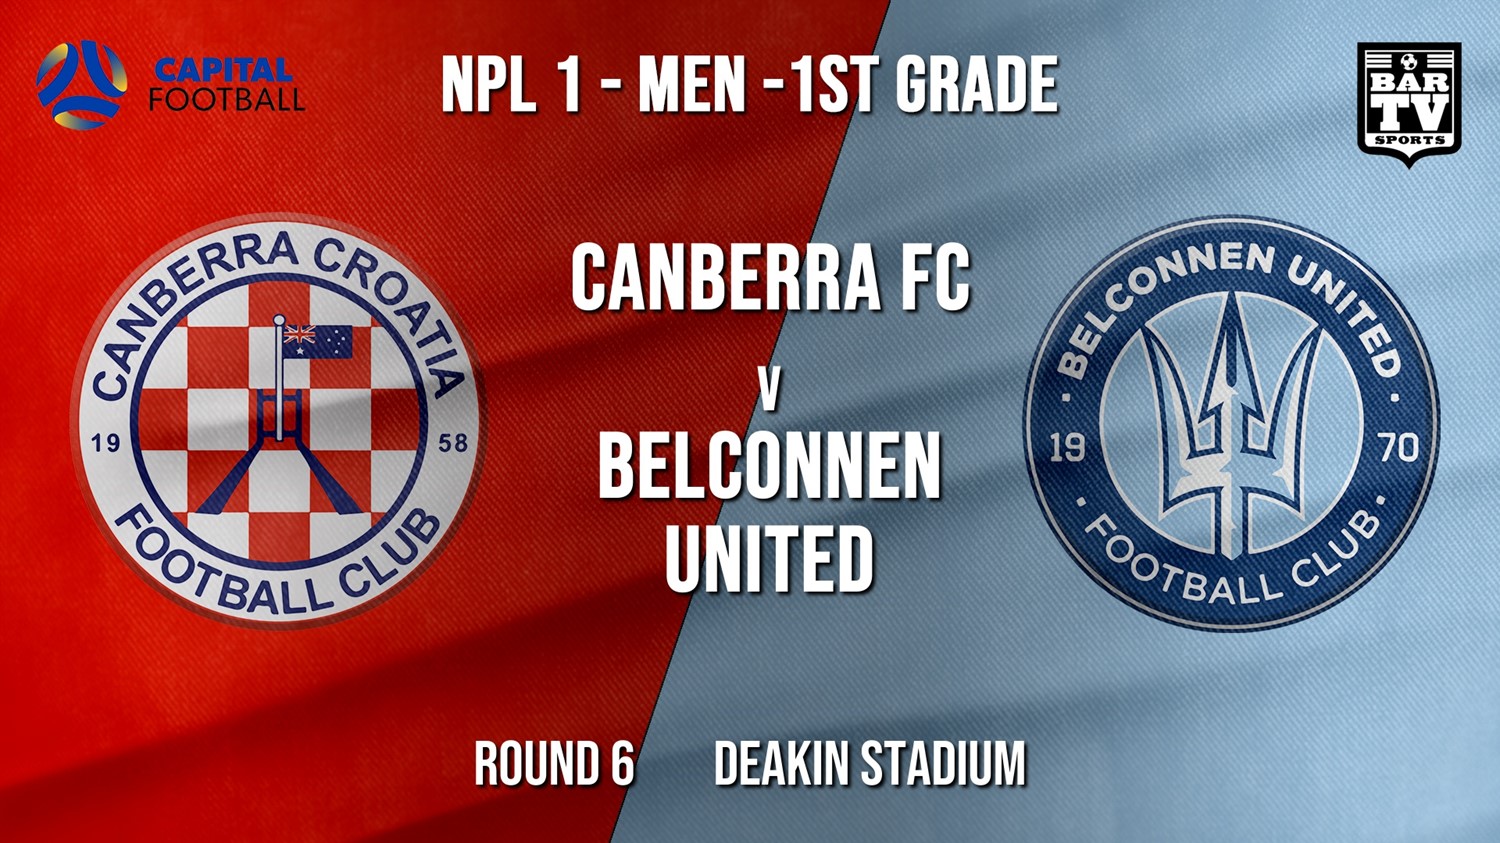 NPL - CAPITAL Round 6 - Canberra FC v Belconnen United Minigame Slate Image